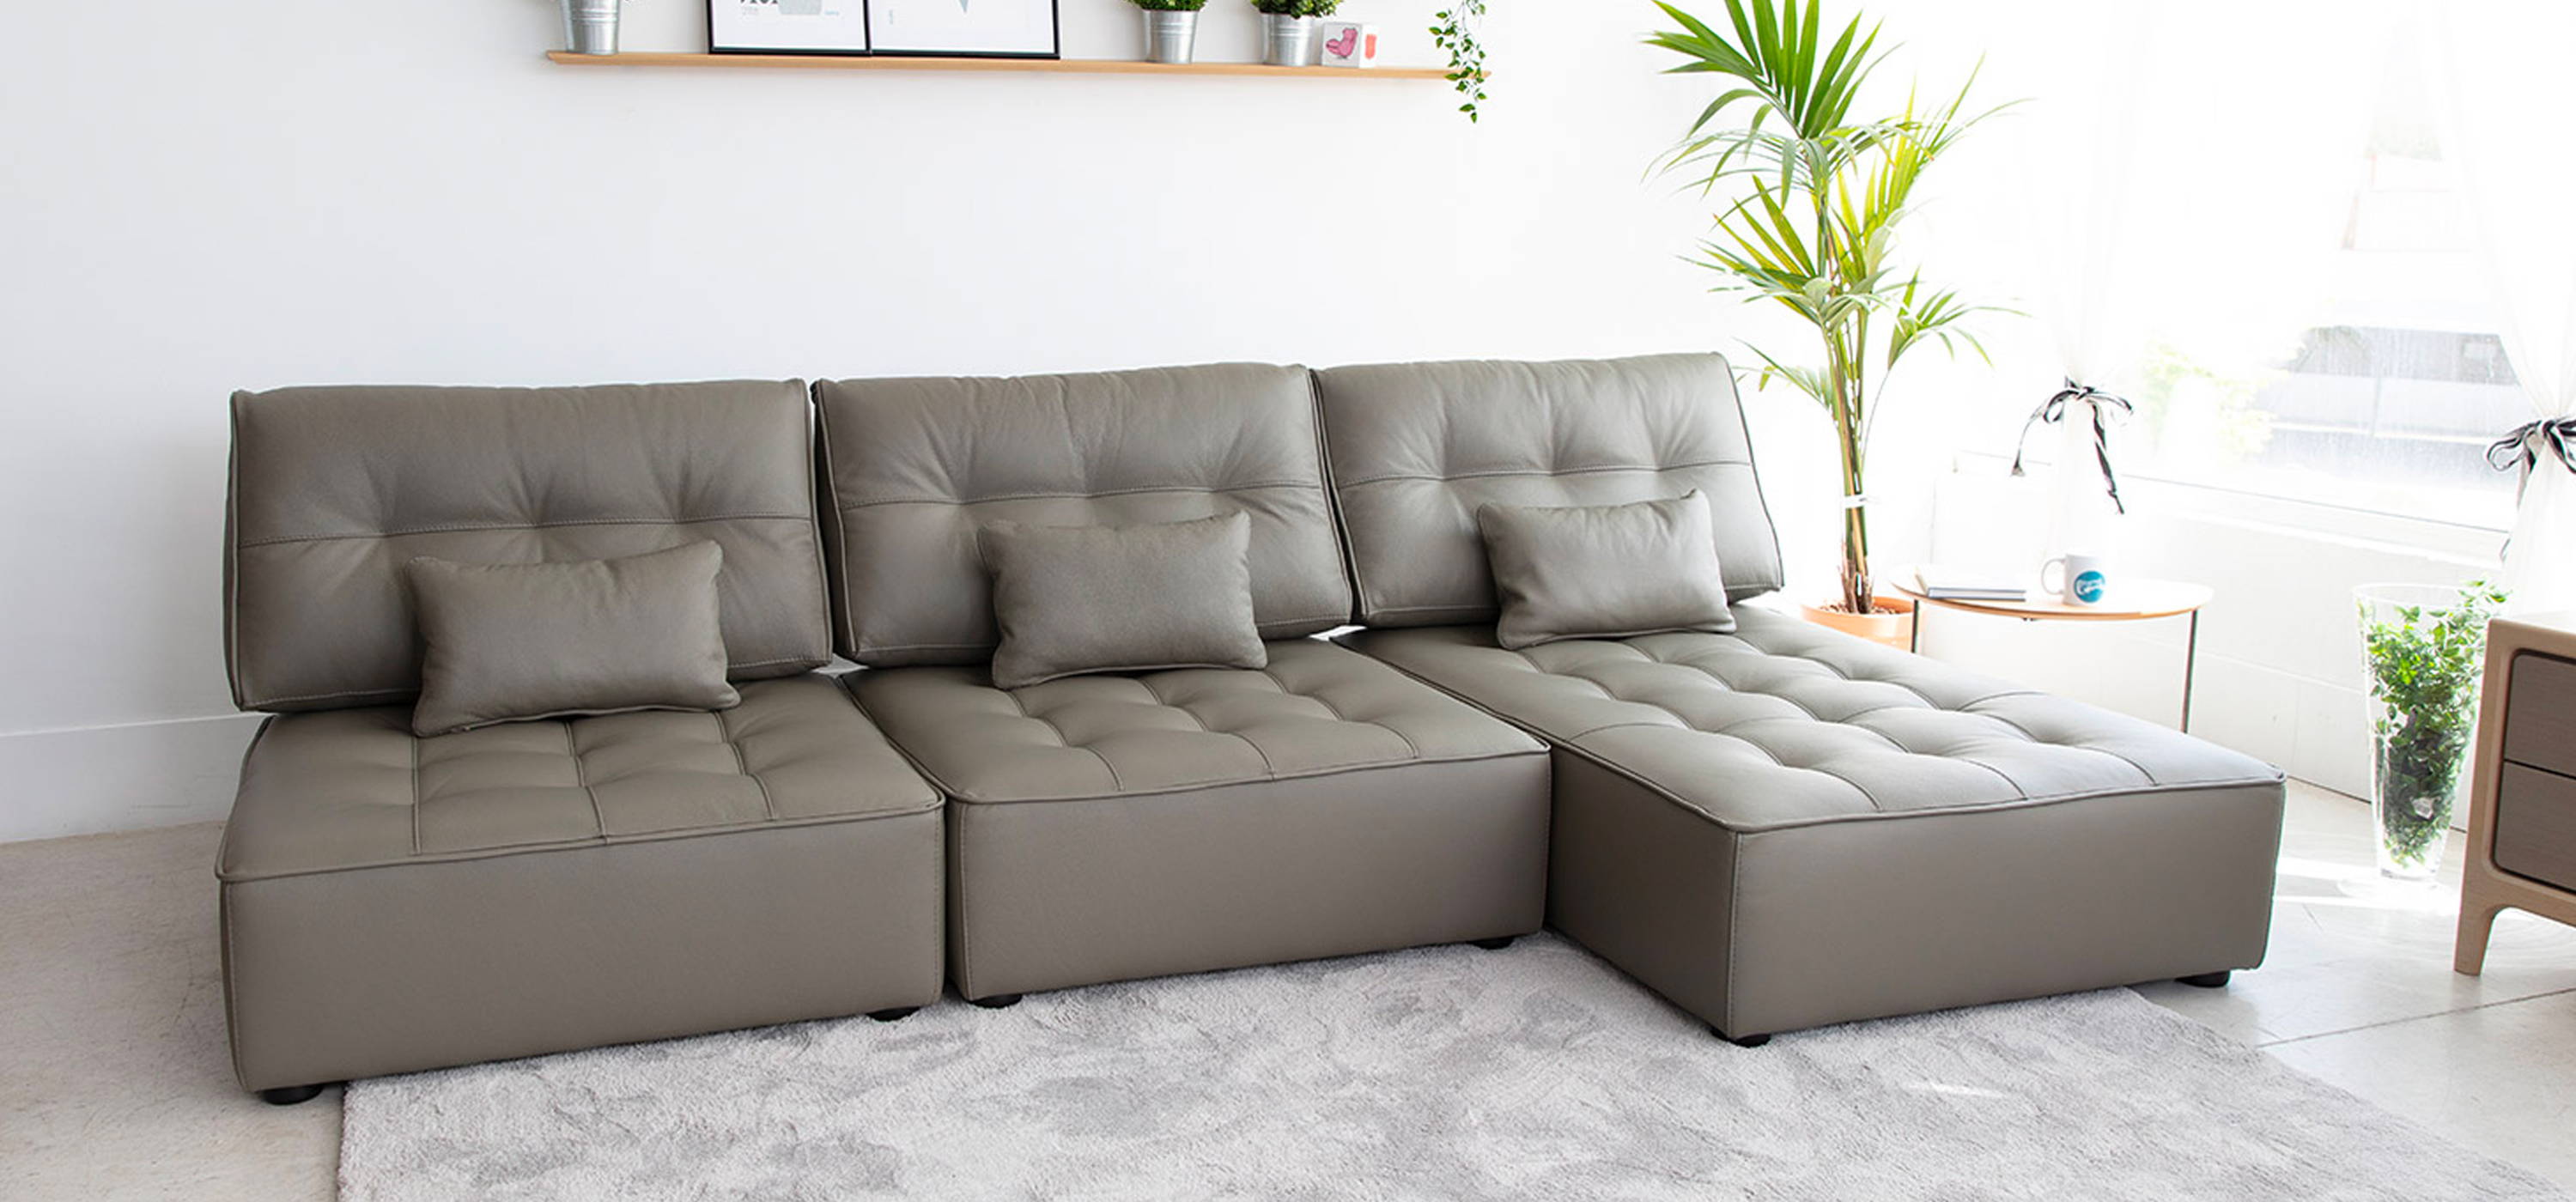 Design A Fama Sofa At BF Home